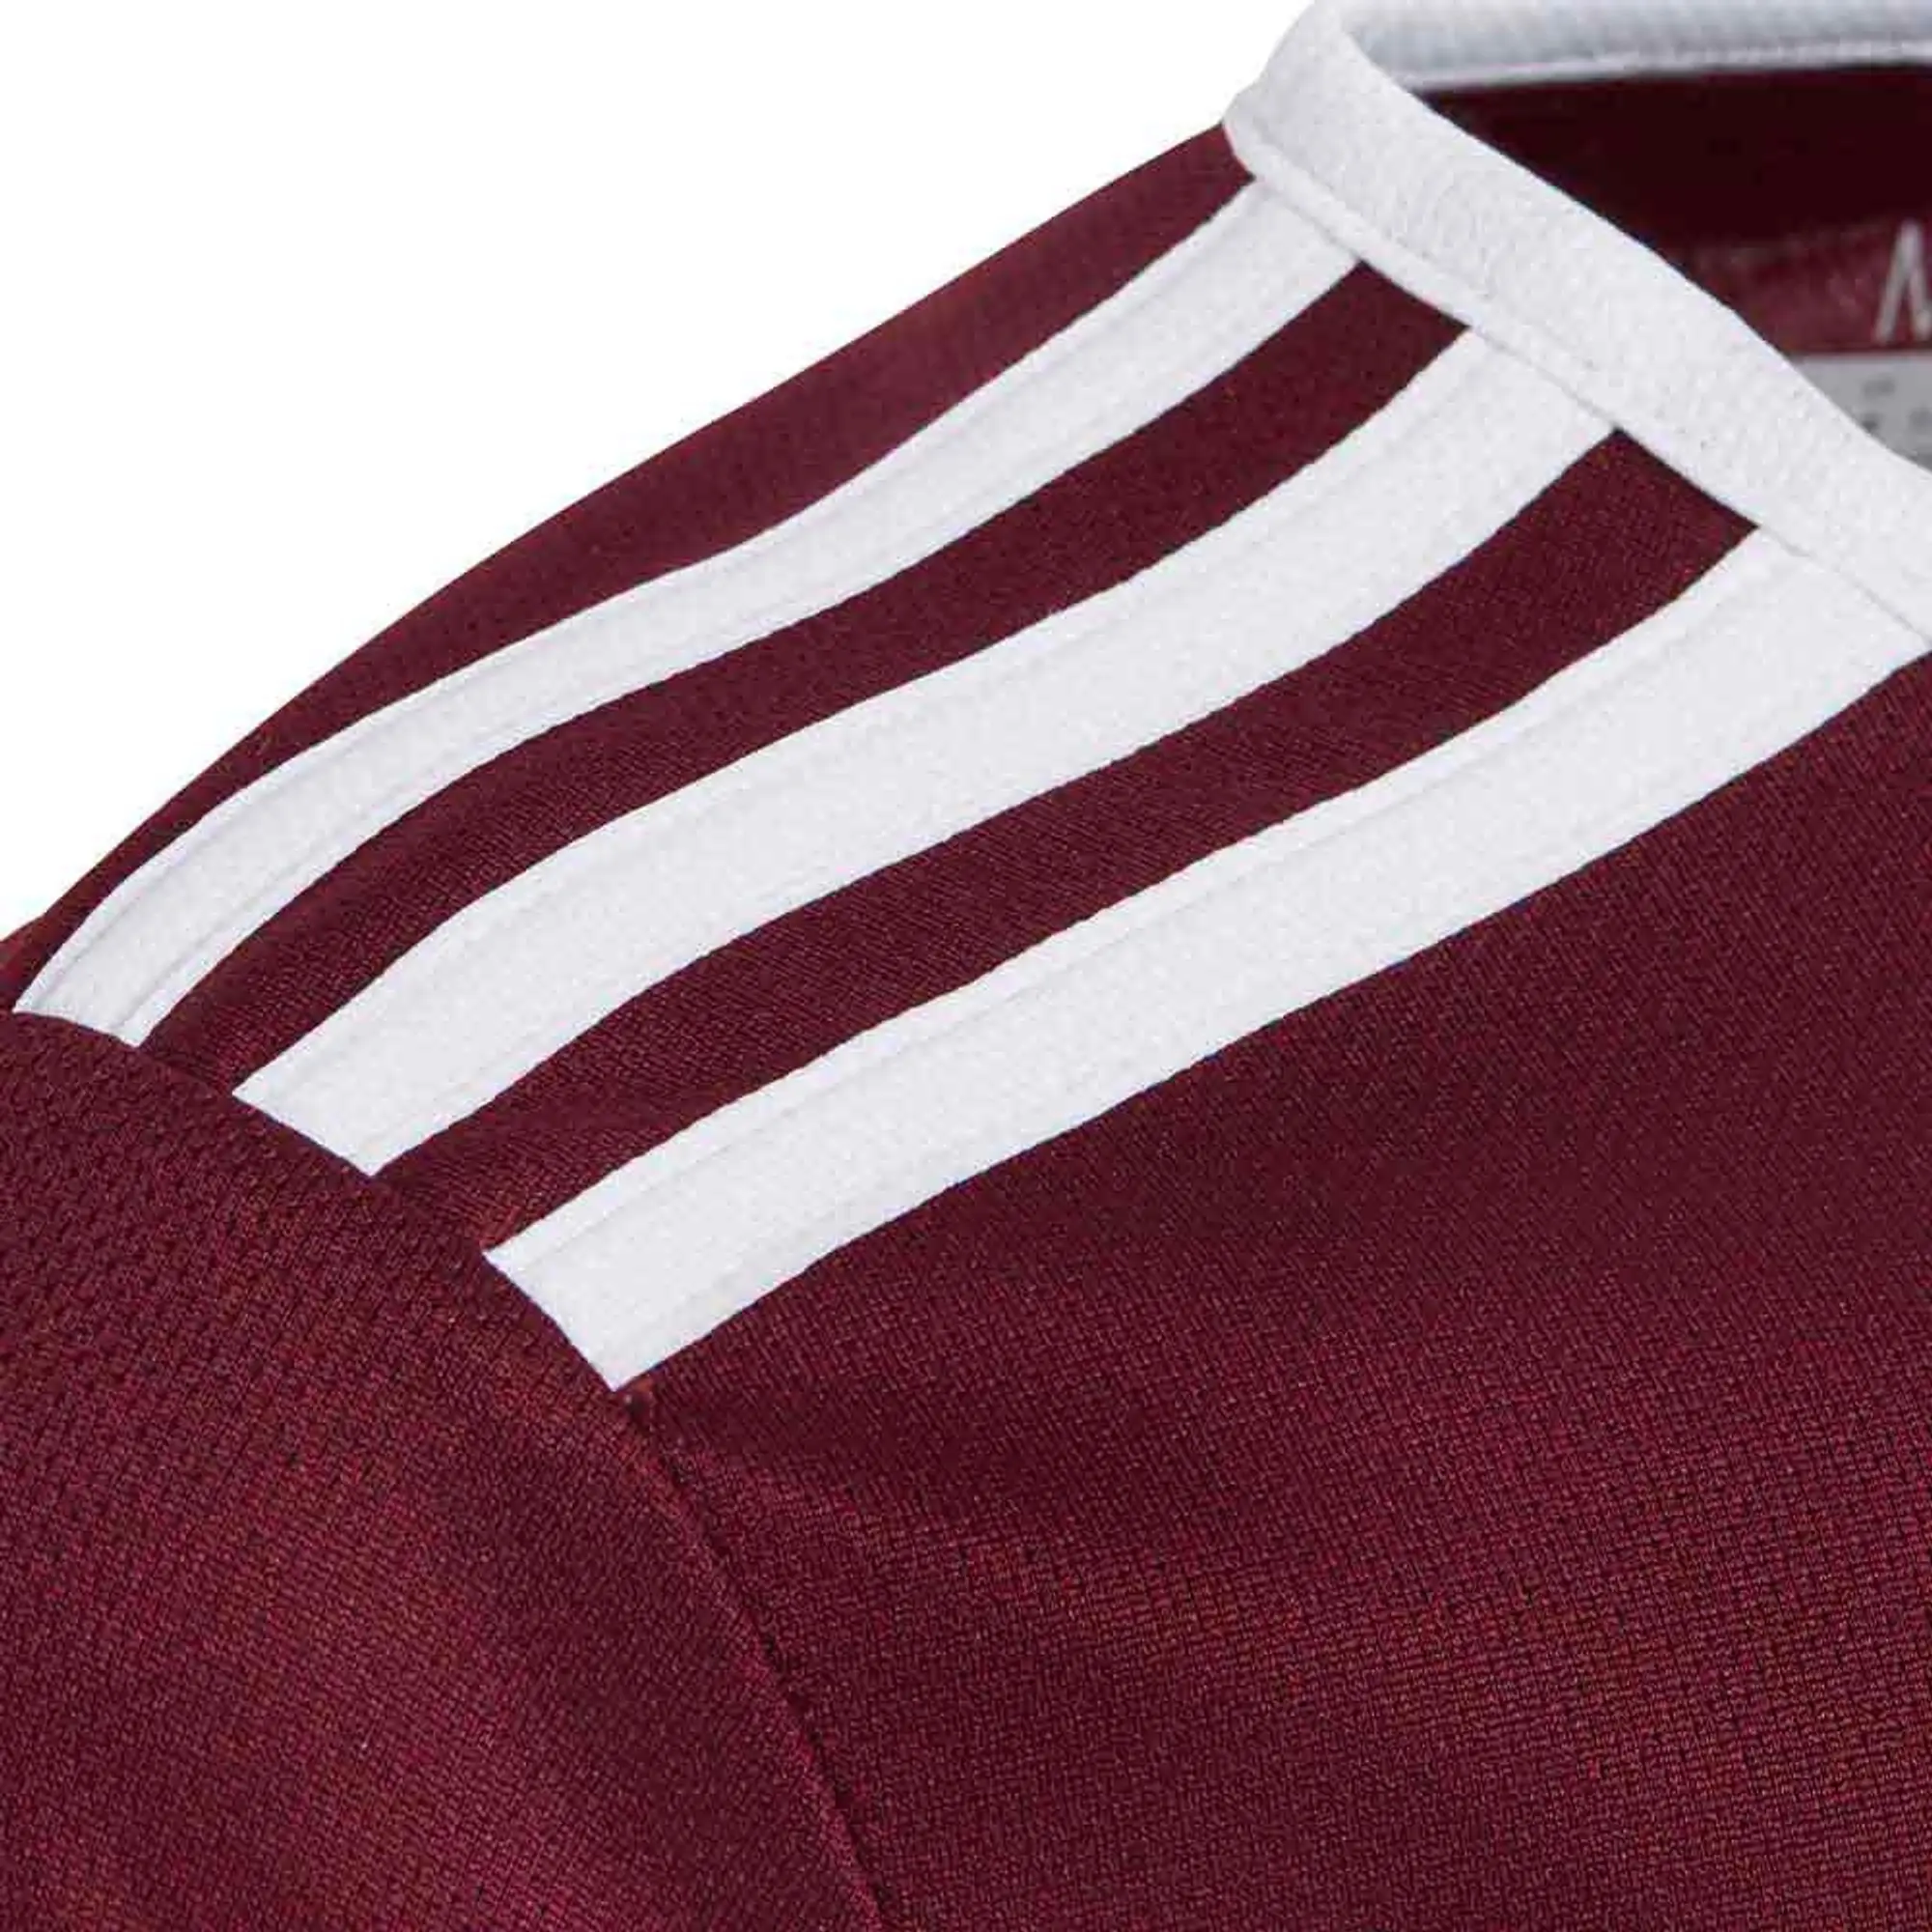 Adidas Entrada 18 Short Sleeve T-shirt  - Red